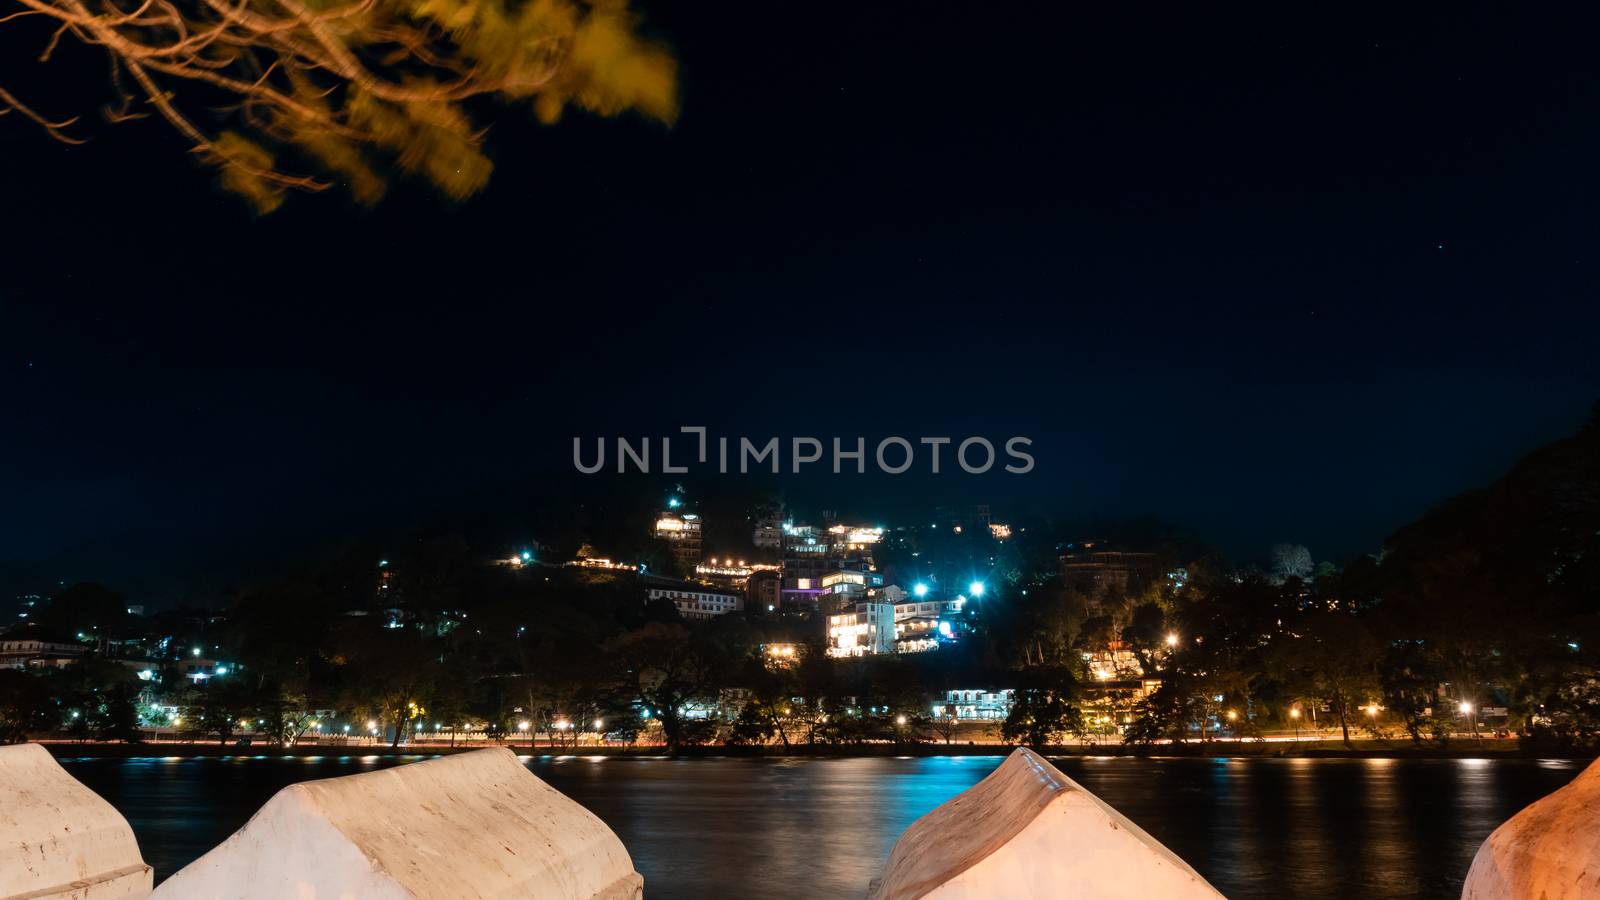 Kandy night long exposure landscape photograph by nilanka